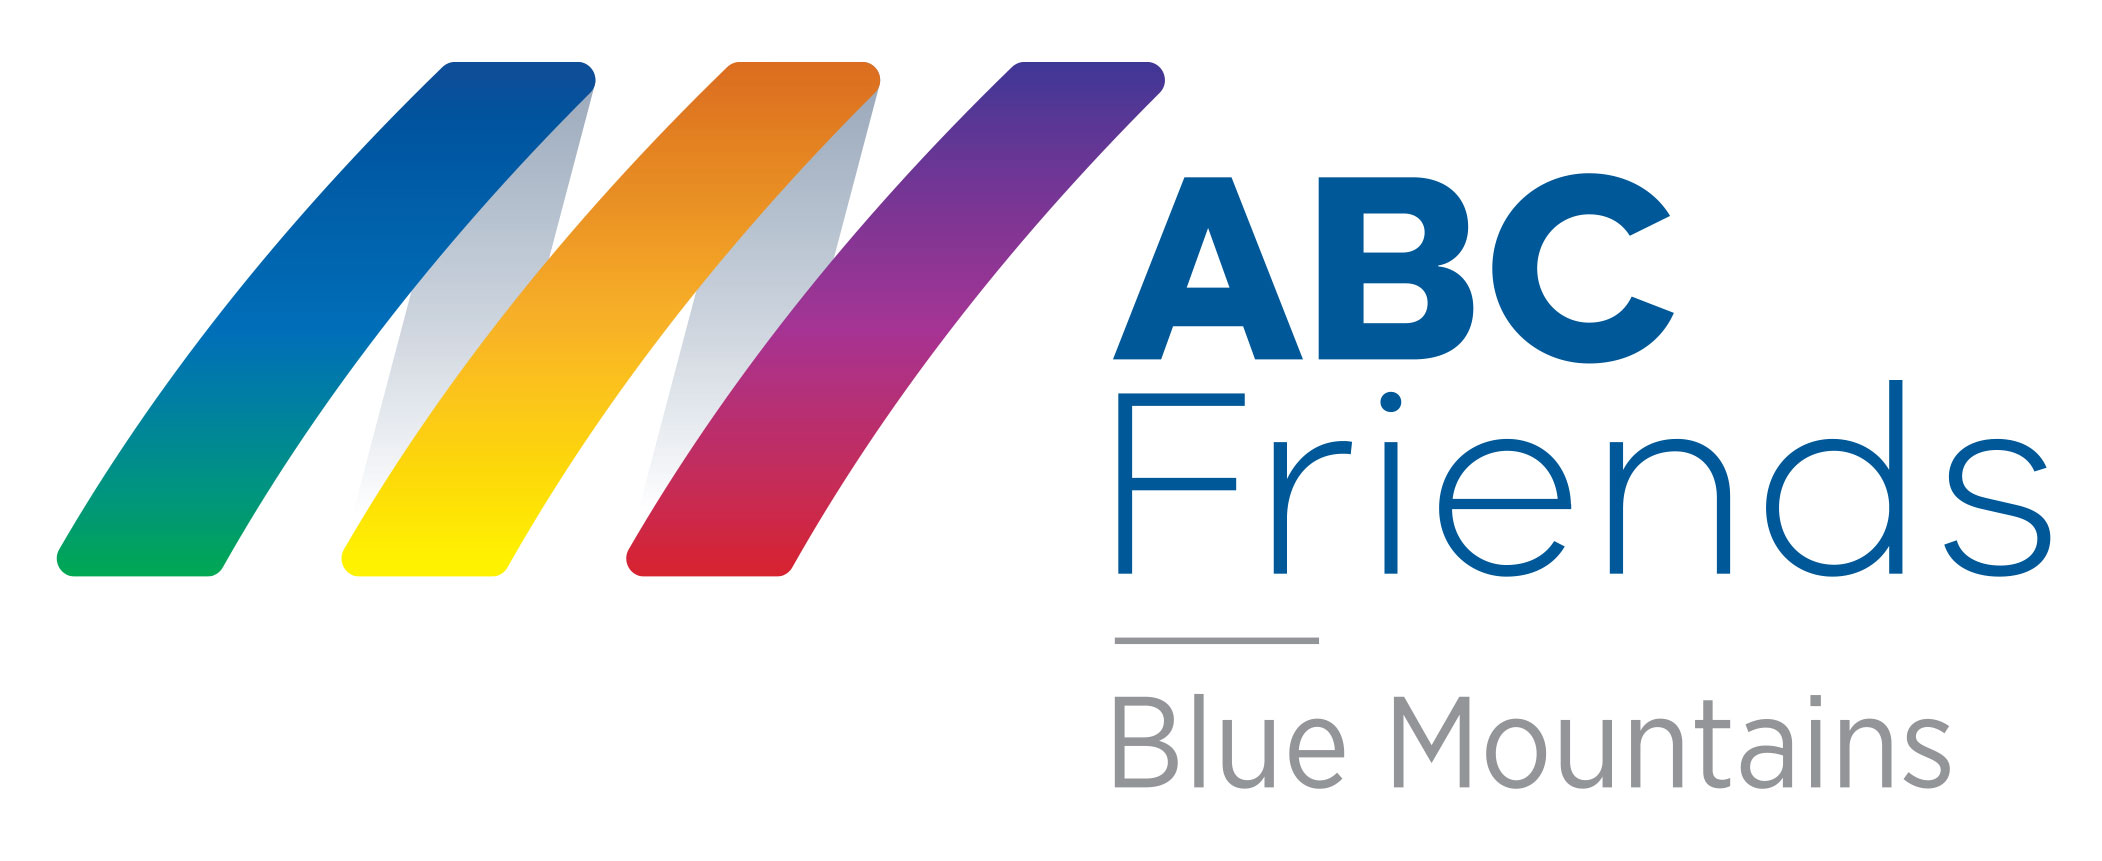 ABC Friends Blue Mountains header image